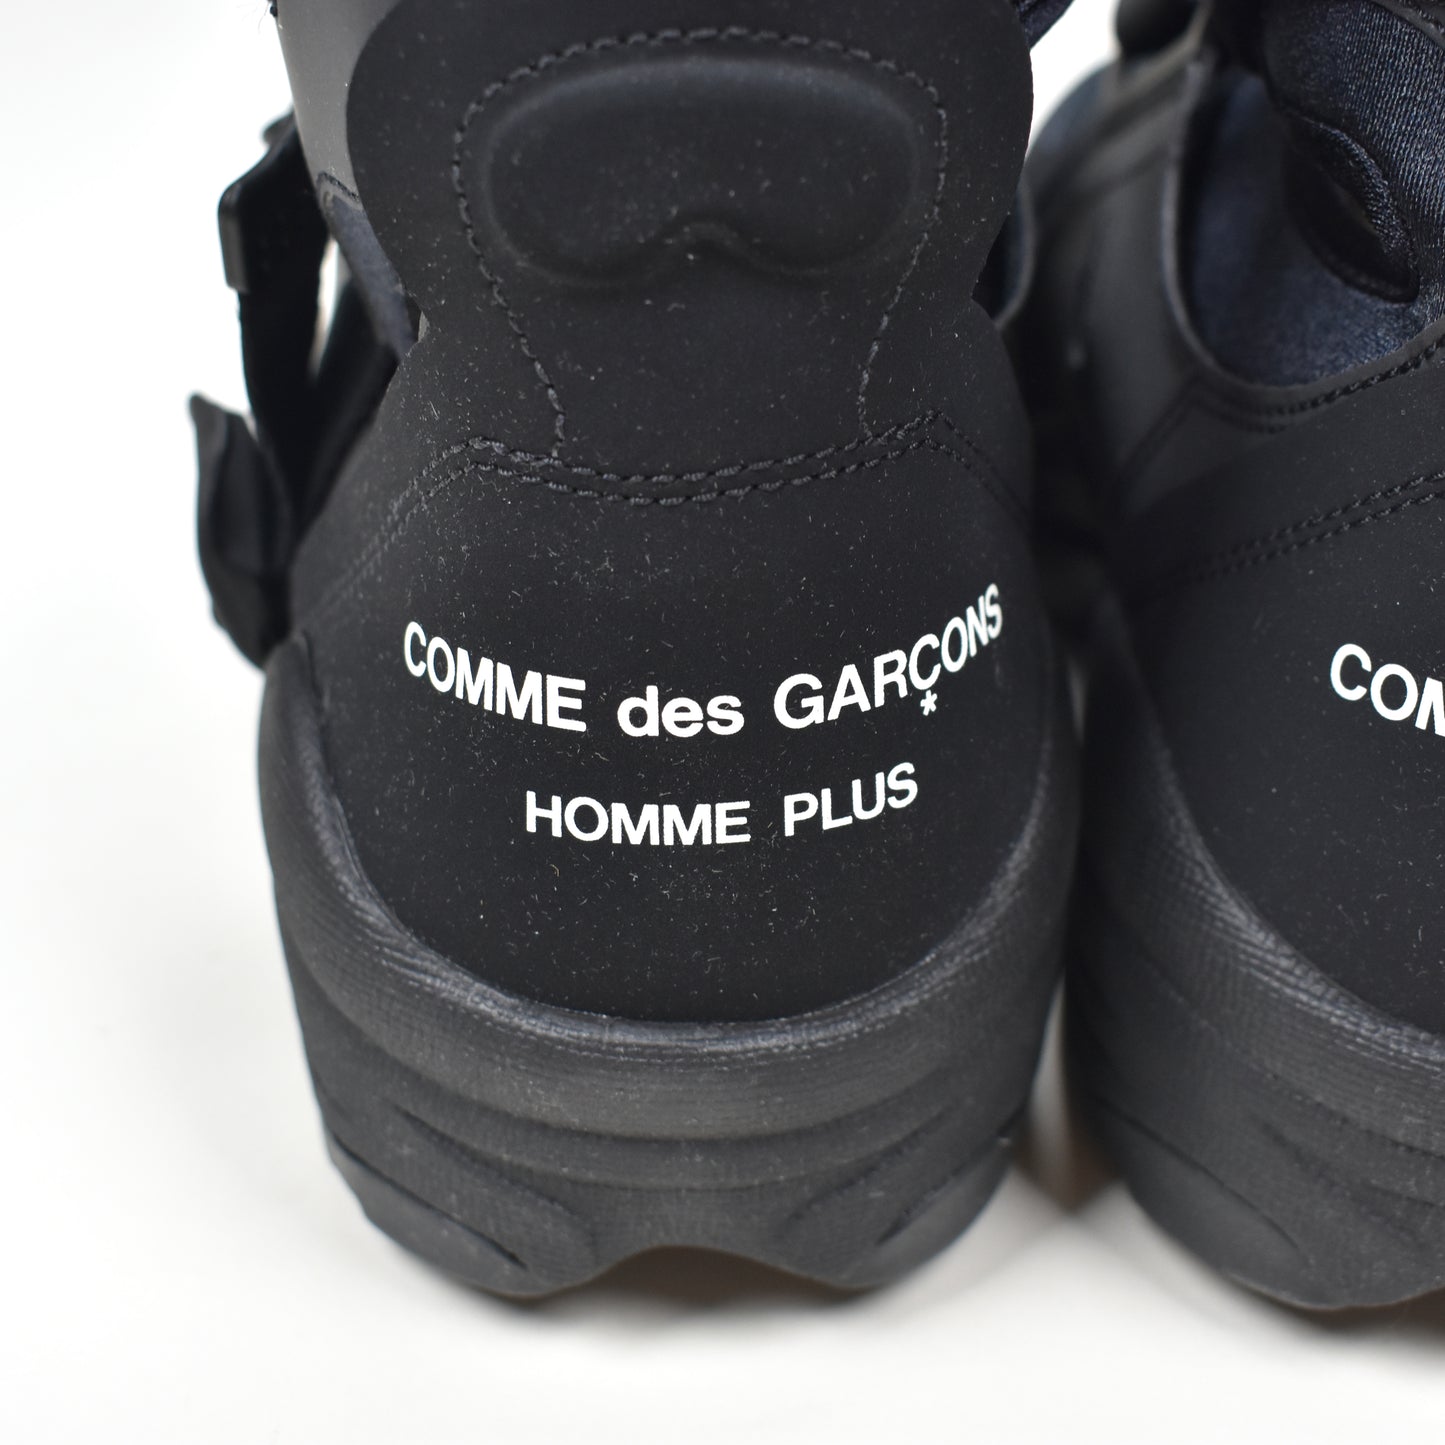 Comme des Garcons x Nike - Air Carnivore CDG (Black)